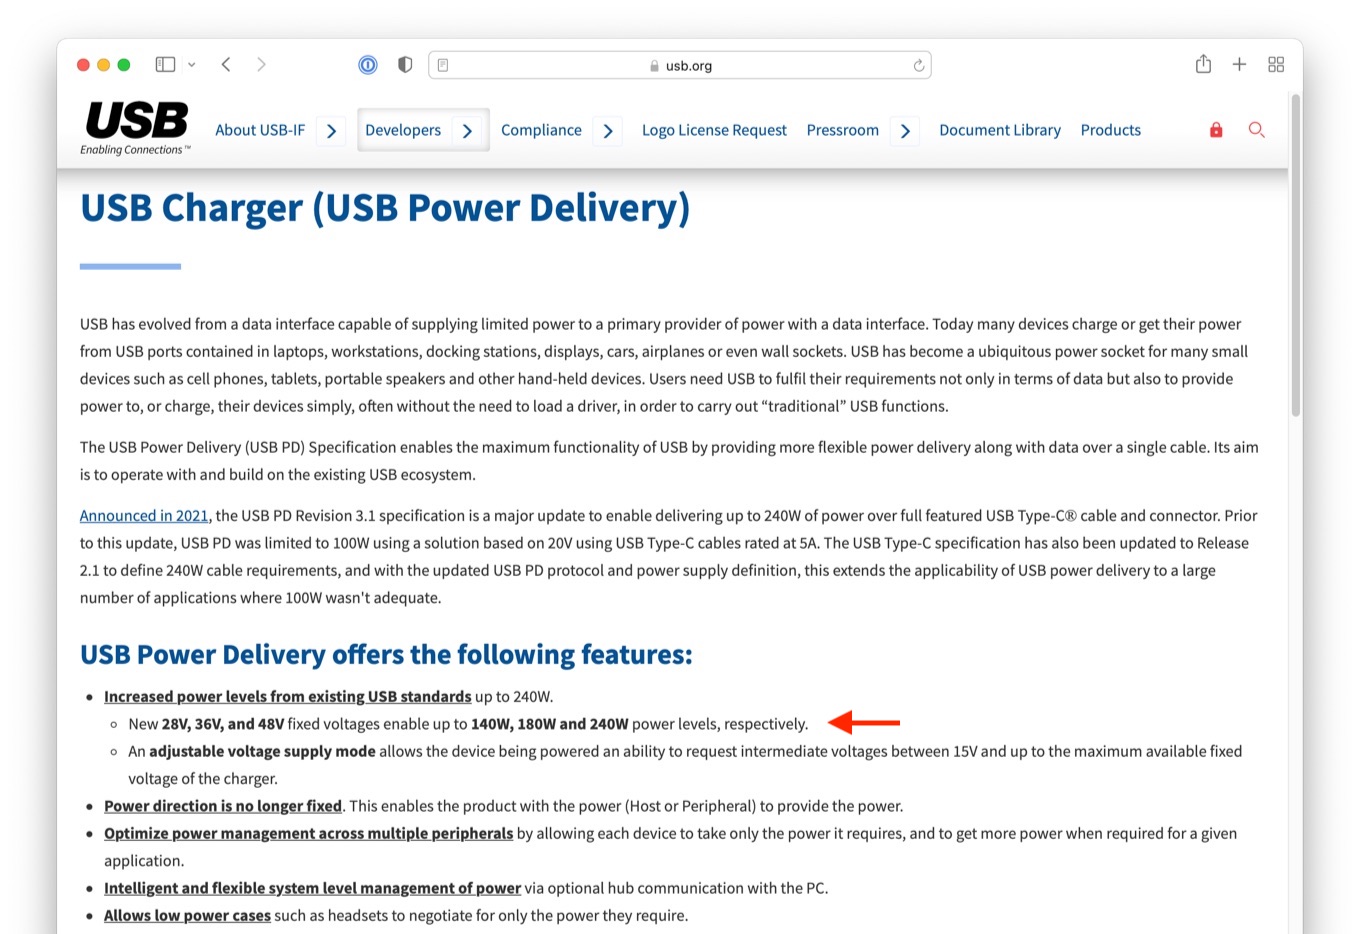 USB Power Delivery規格の3.1リビジョンは、最大48 V、240 Wの電力を供給